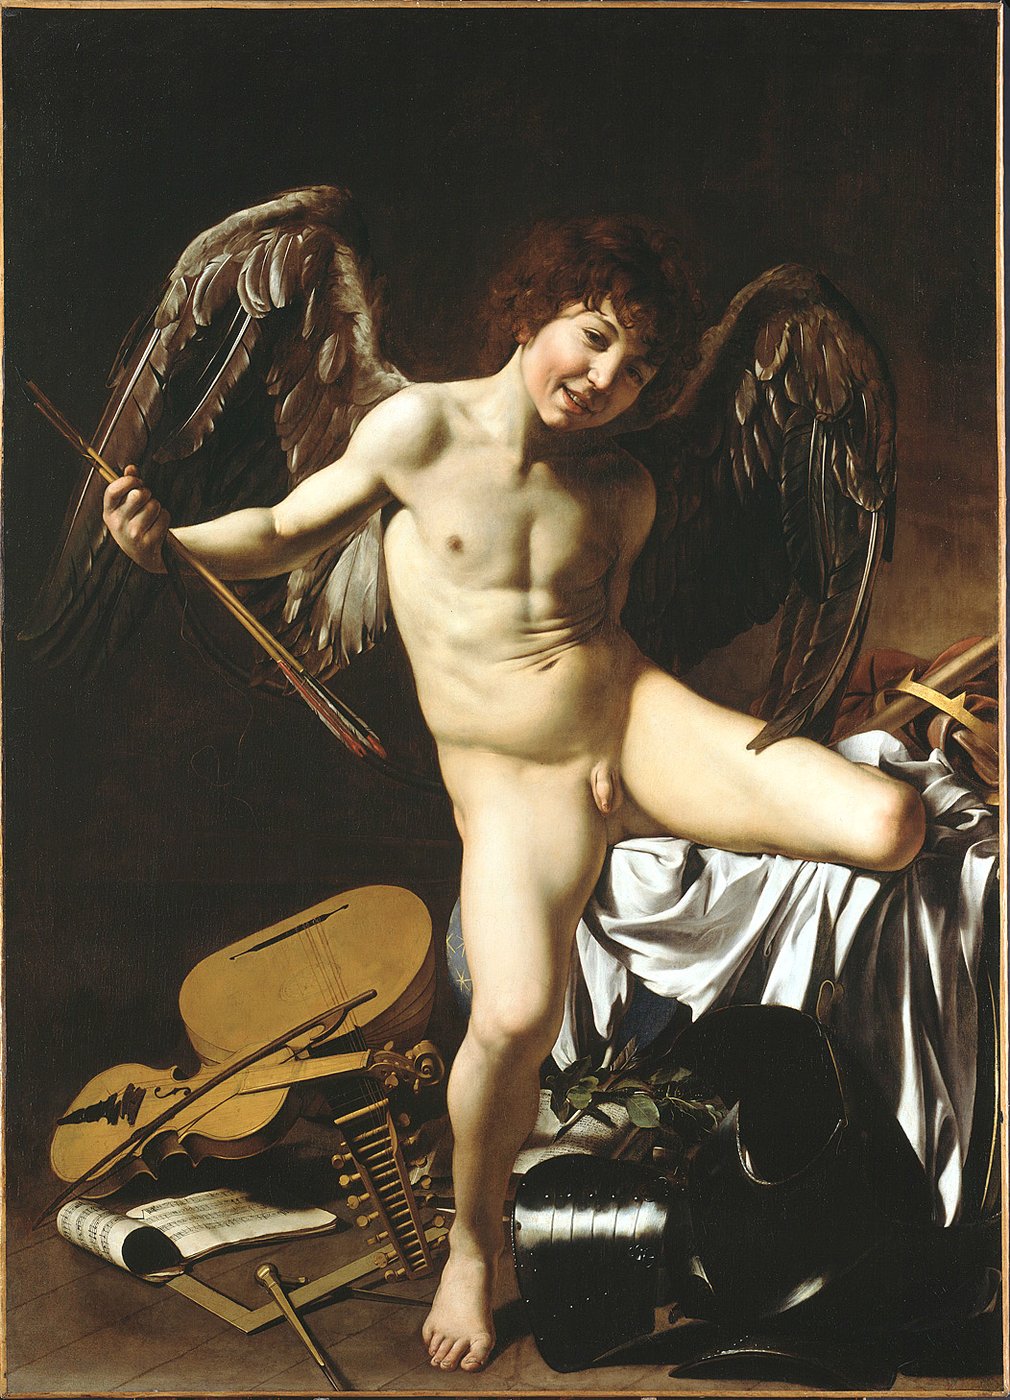 Caravaggio, Omnia vincit Amor, 1602

Staatliche Museen zu Berlin